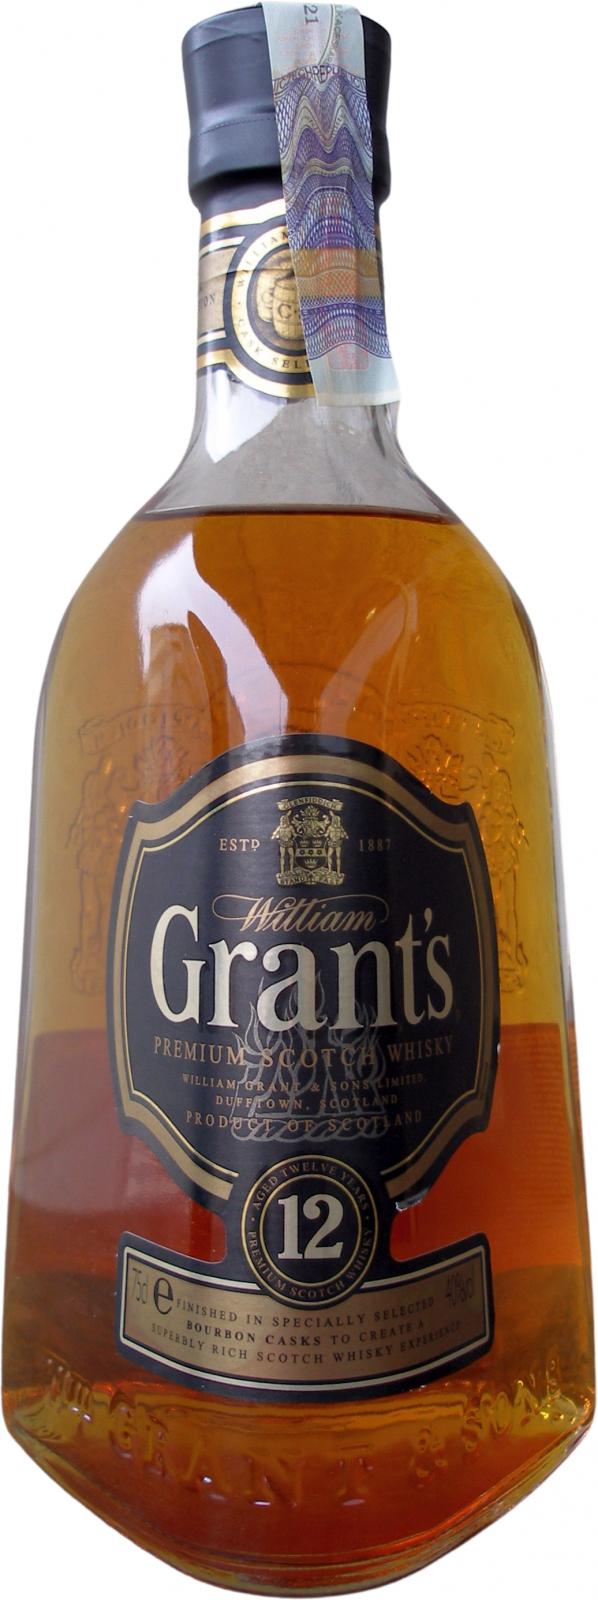 Grant's 12yo Premium Scotch Whisky 1st Fill Bourbon Casks Finish 40% 750ml